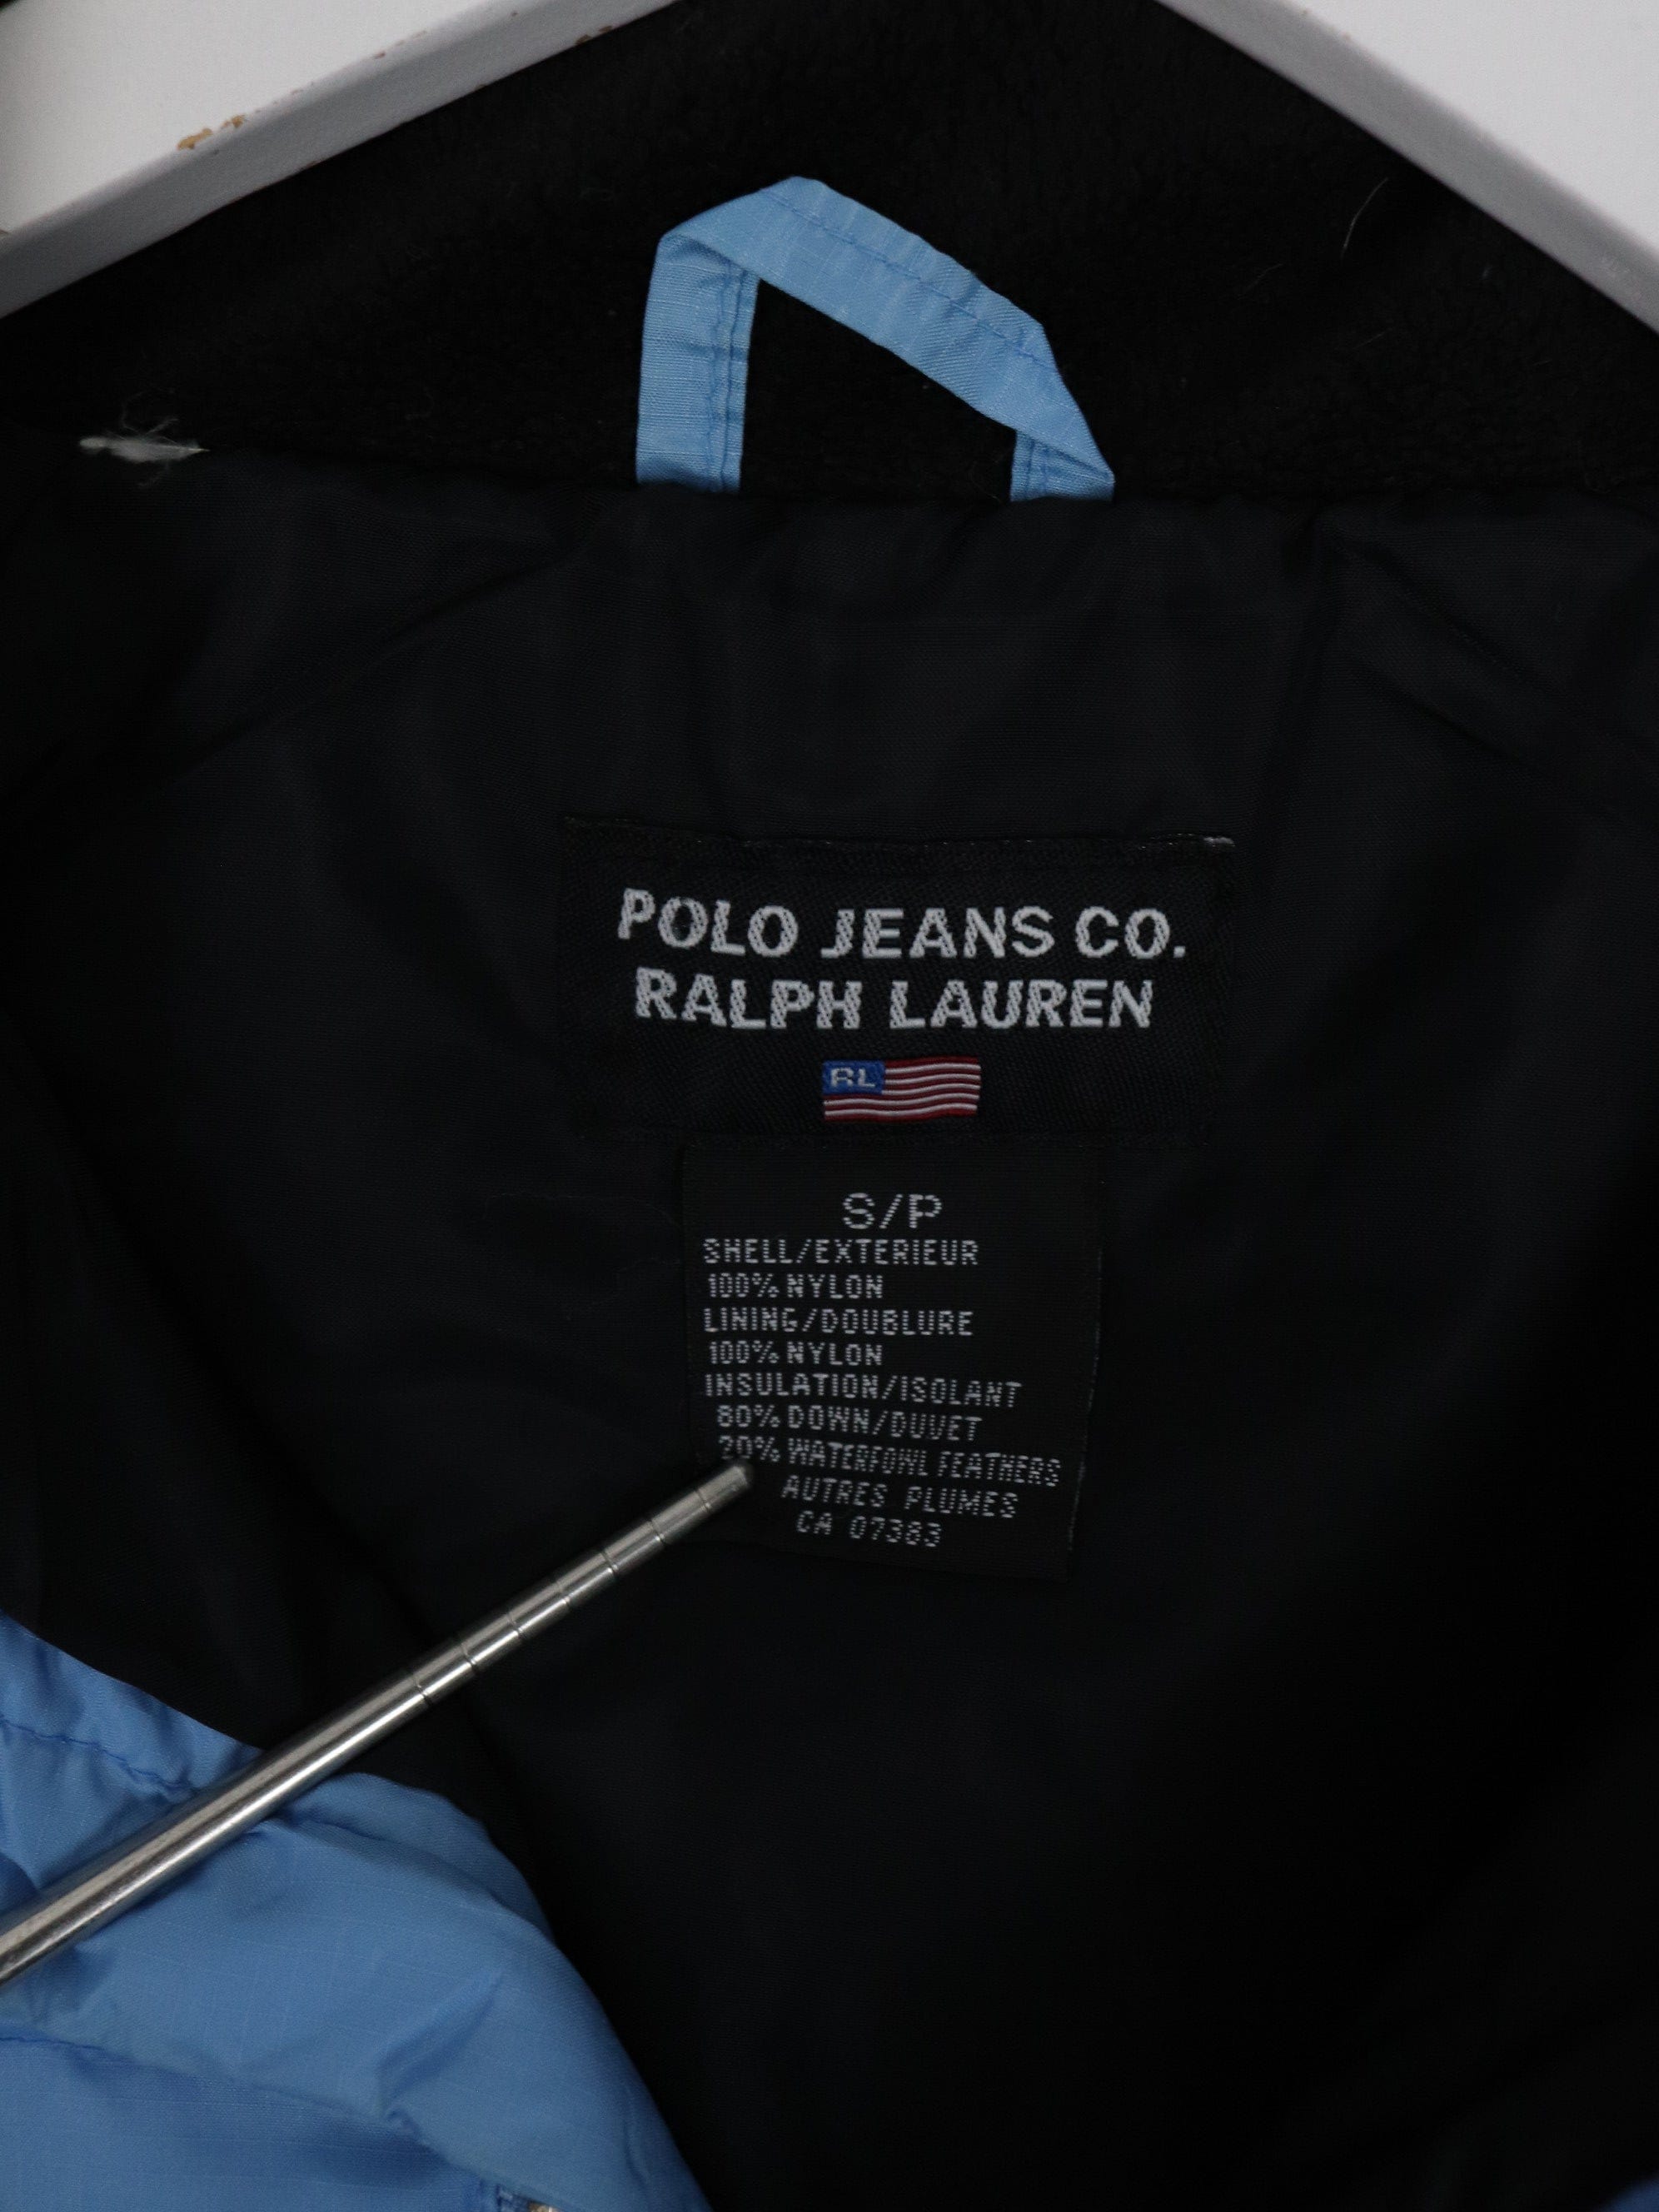  Polo Ralph Lauren - Men's Jeans / Men's Clothing